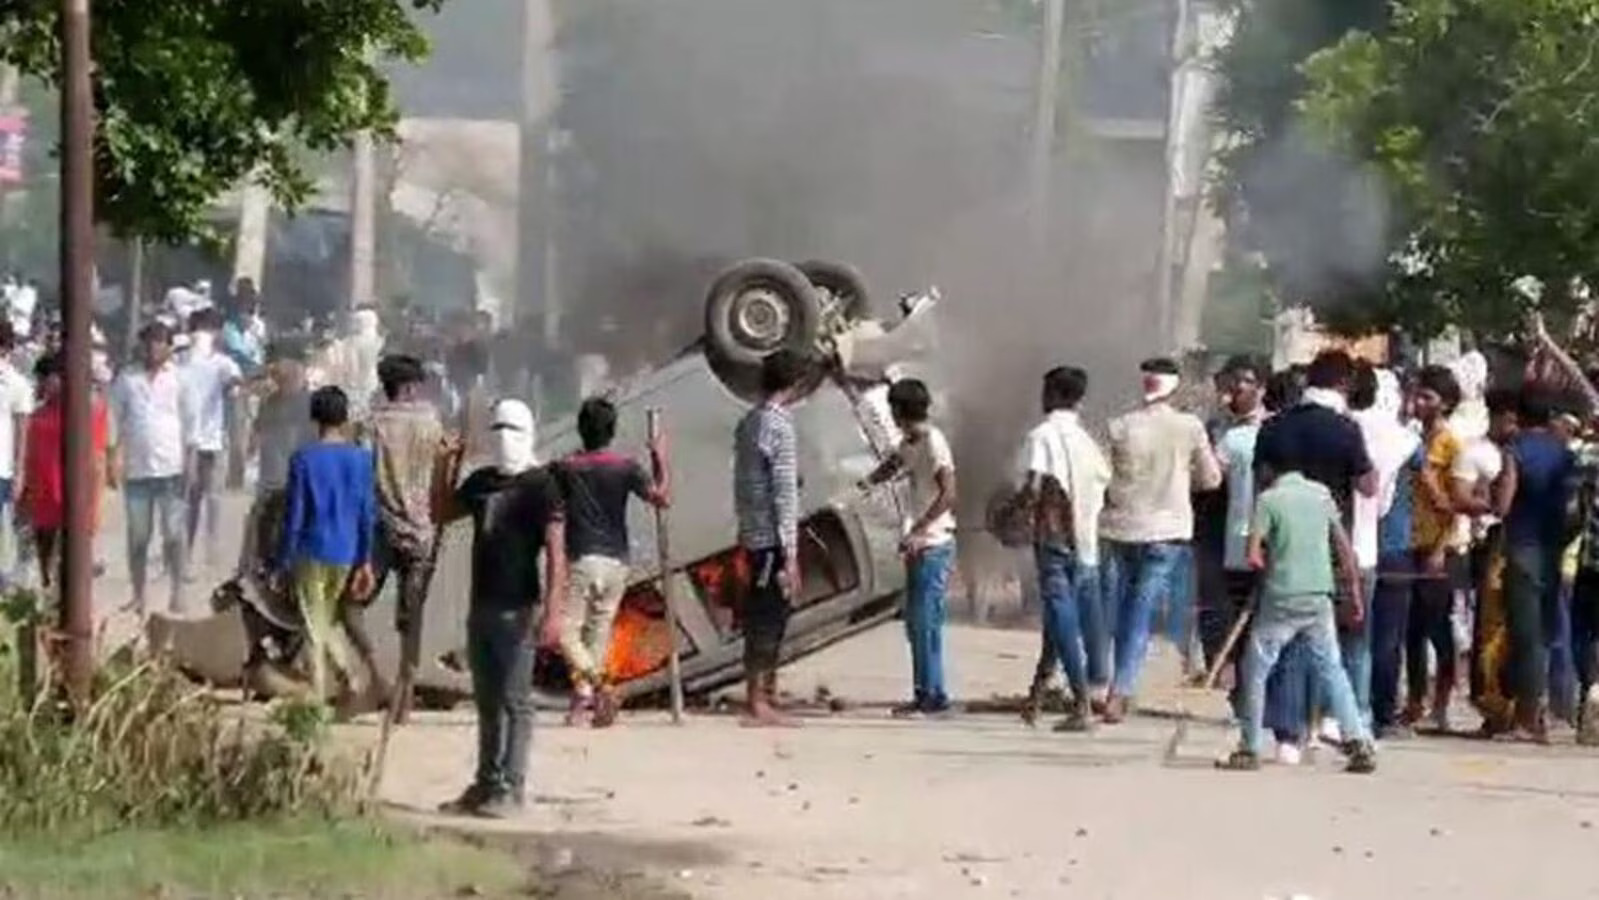 High alert in Haryana, more forces deployed after communal violence; Several injured